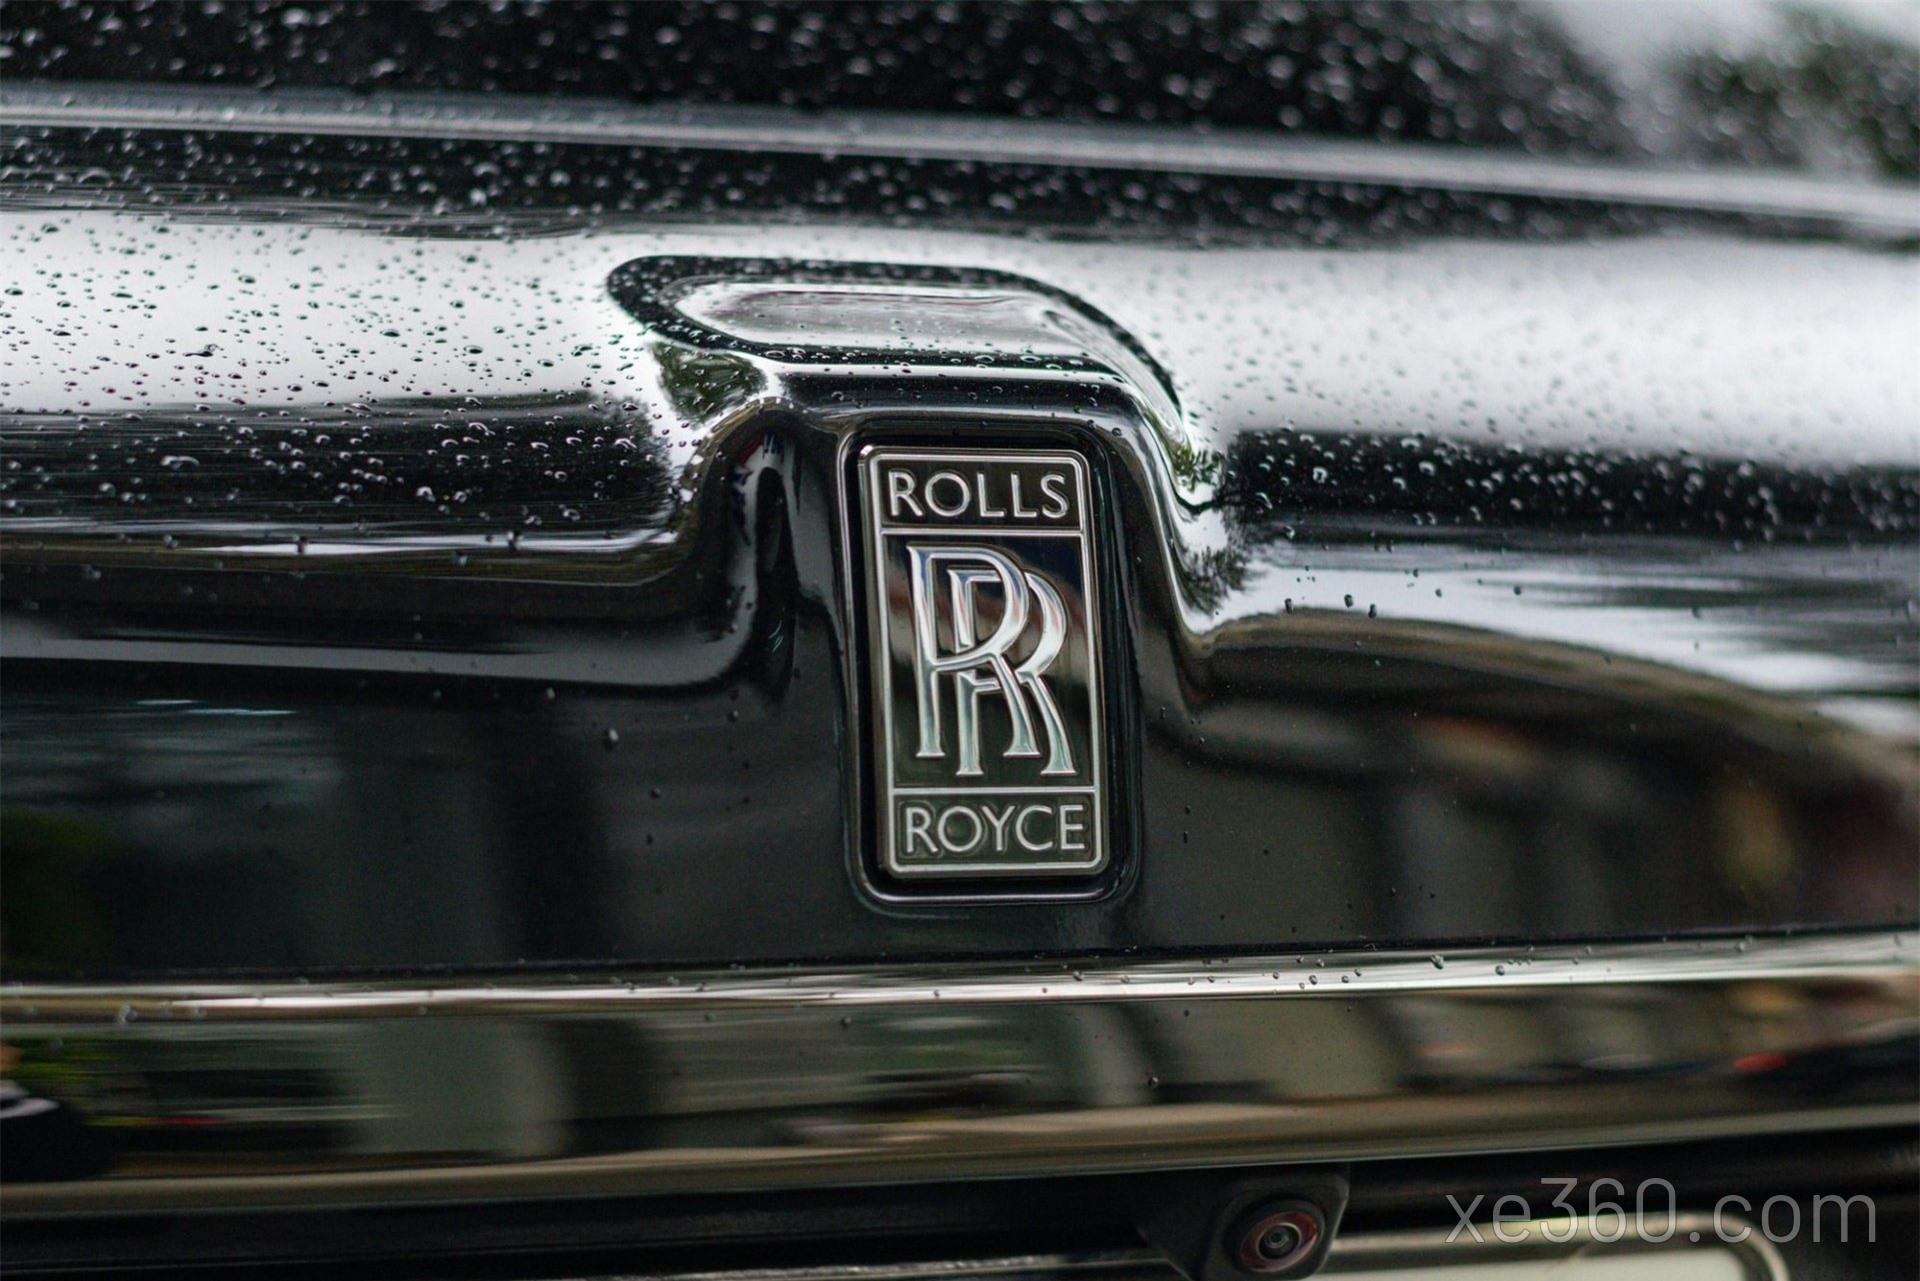 2019 ROLLSROYCE Cullinan 675 V12 SUV 5dr Petrol Auto 4WD Euro 6 250000  24784 miles Dark Emerald  JCT600